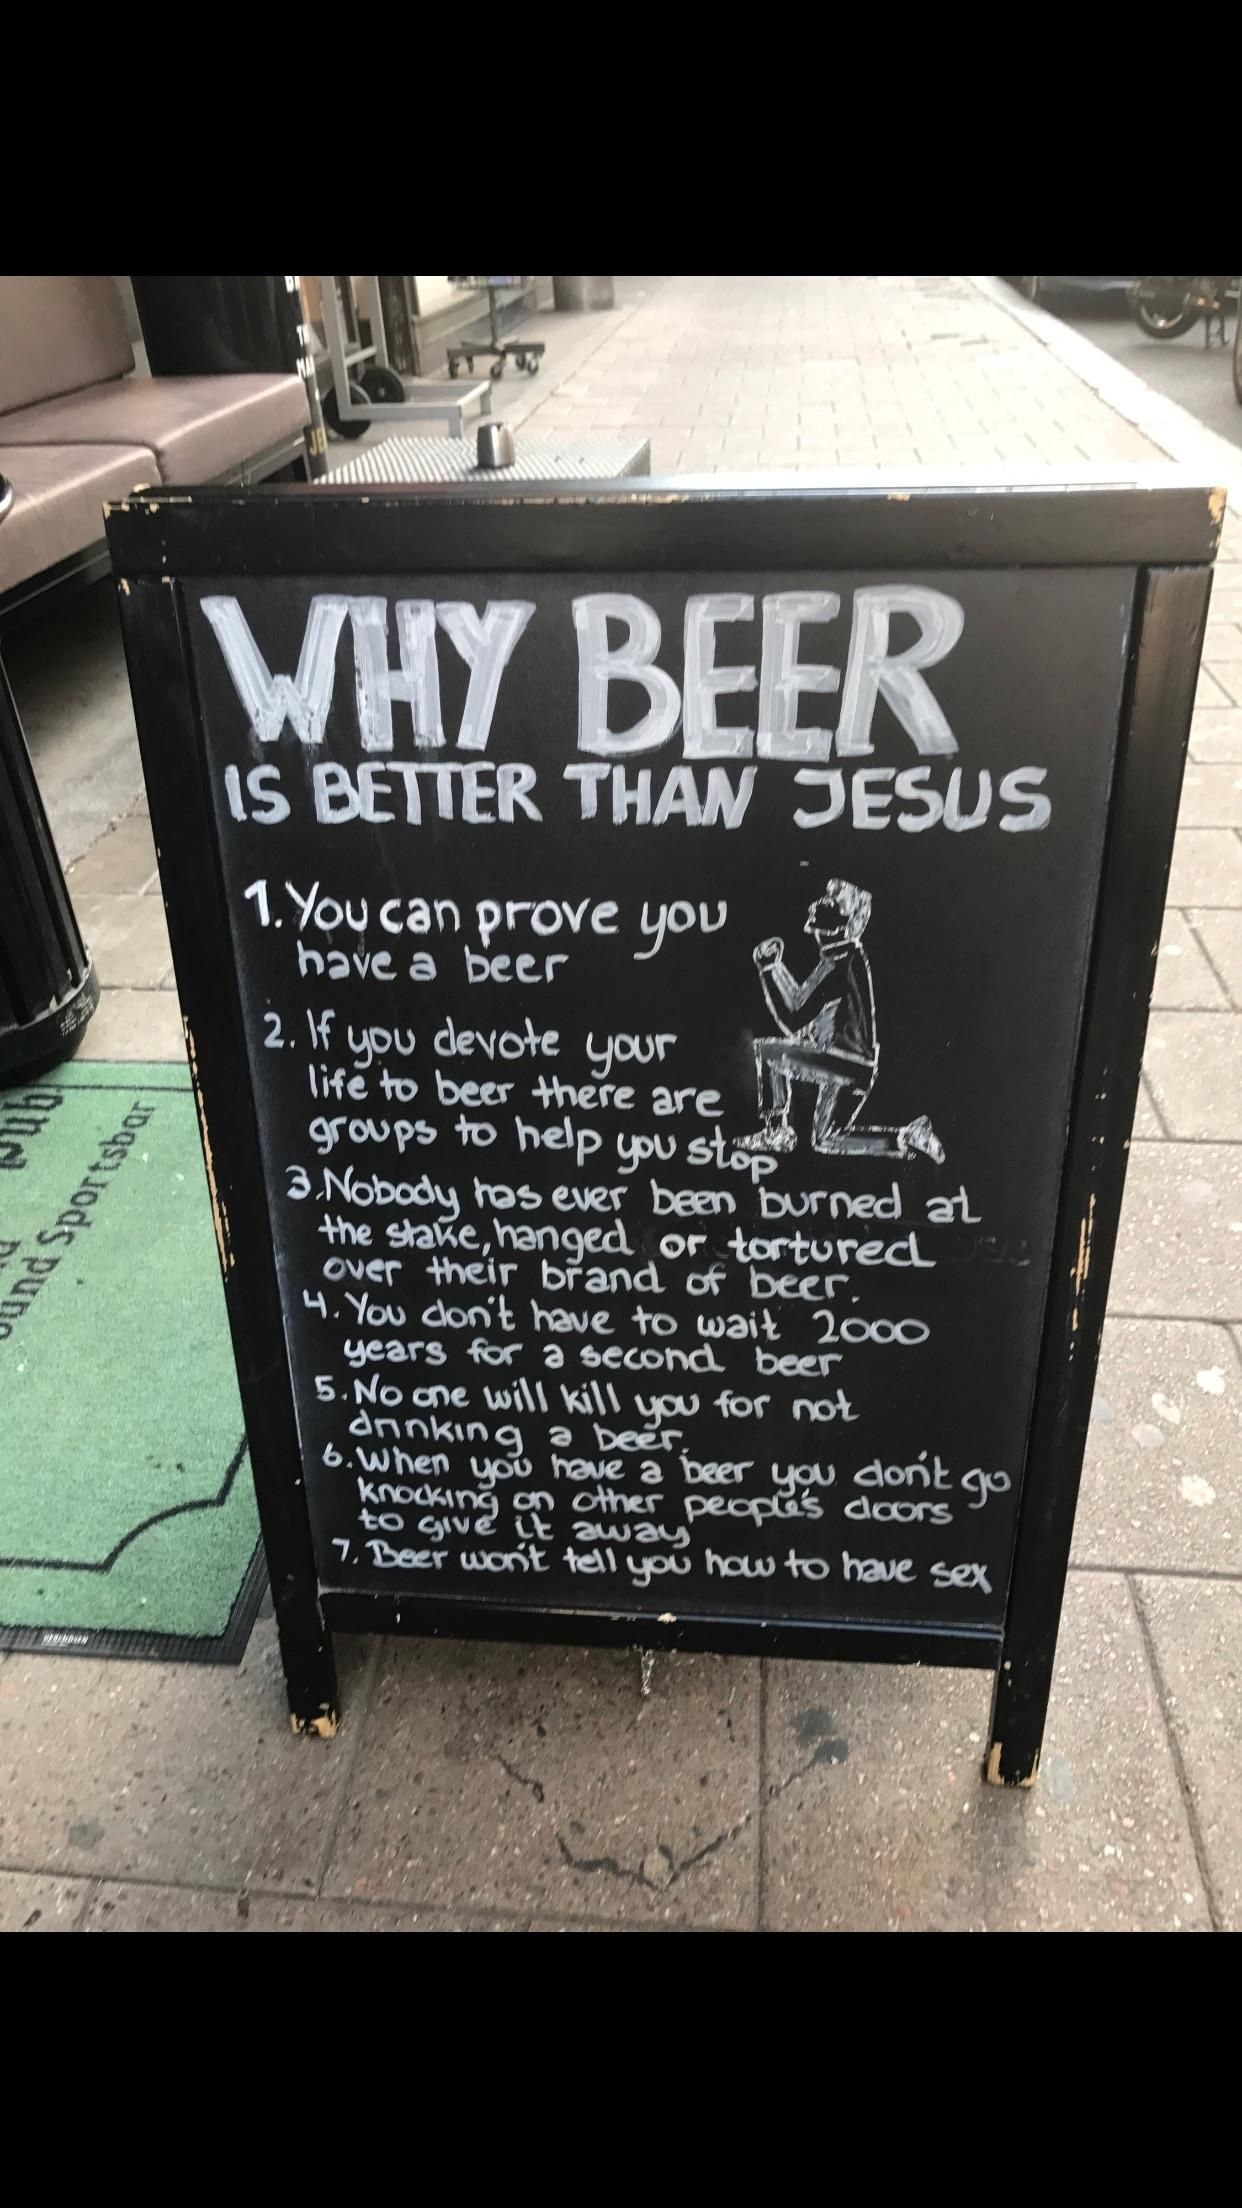 Why people in Oslo like beer more than Jesus!